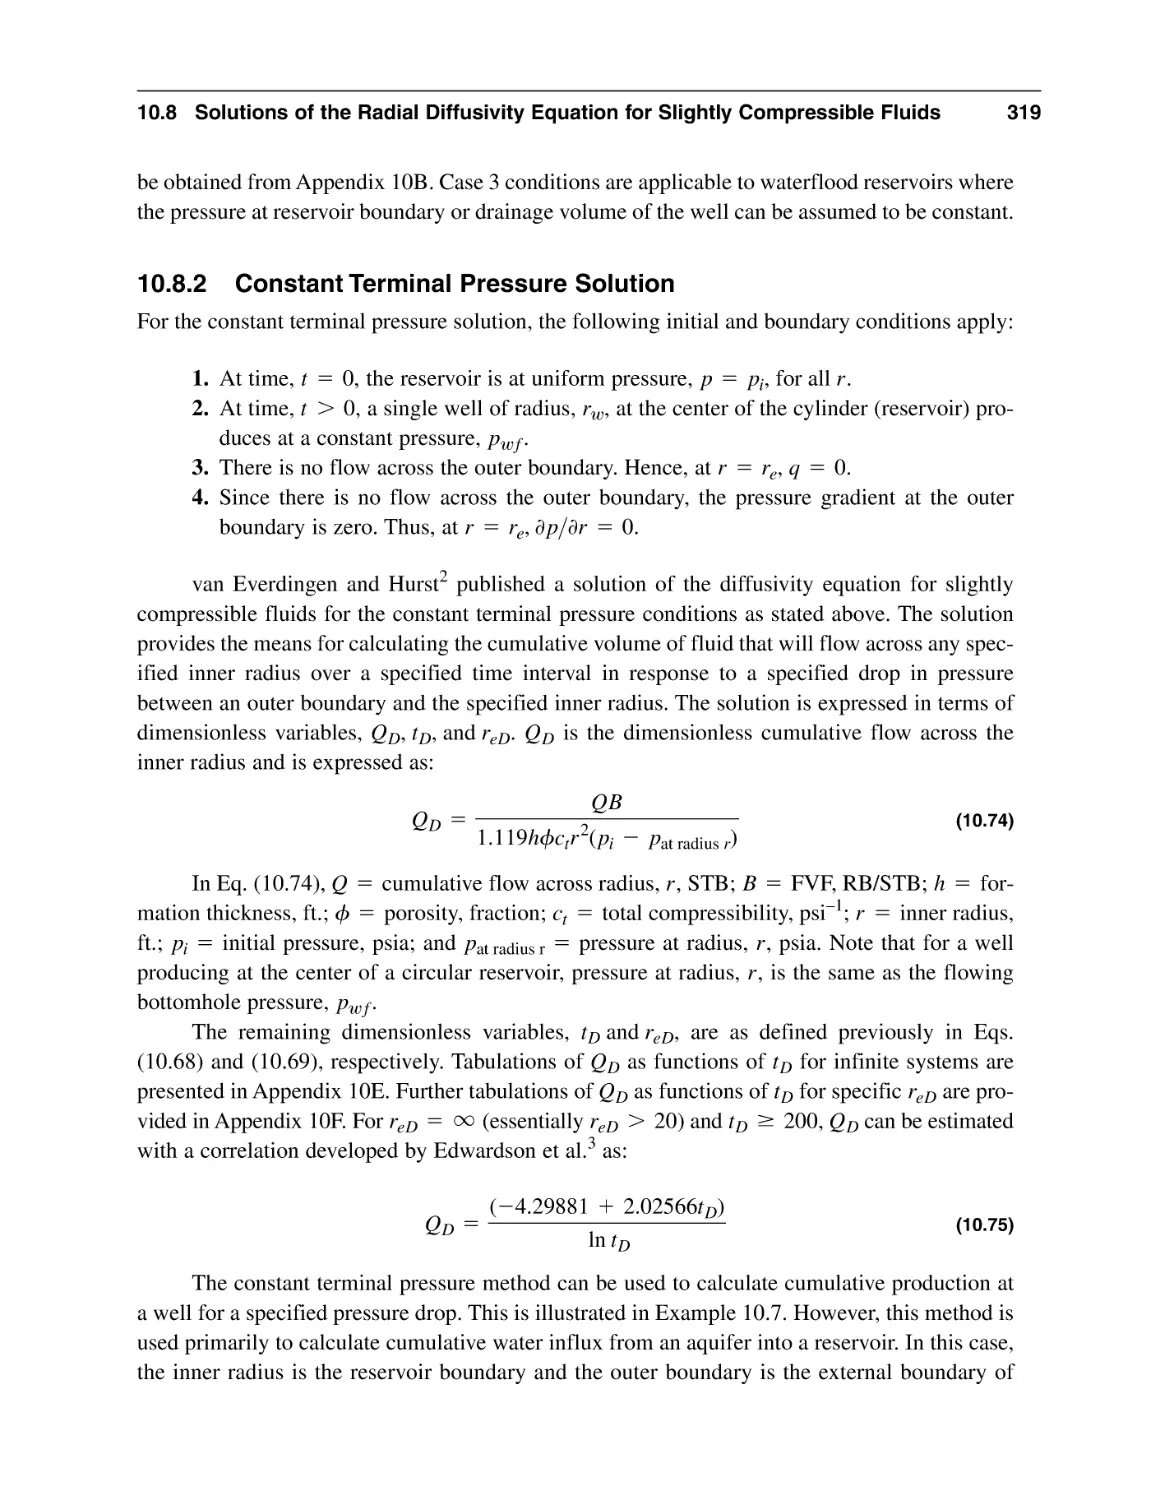 10.8.2 Constant Terminal Pressure Solution